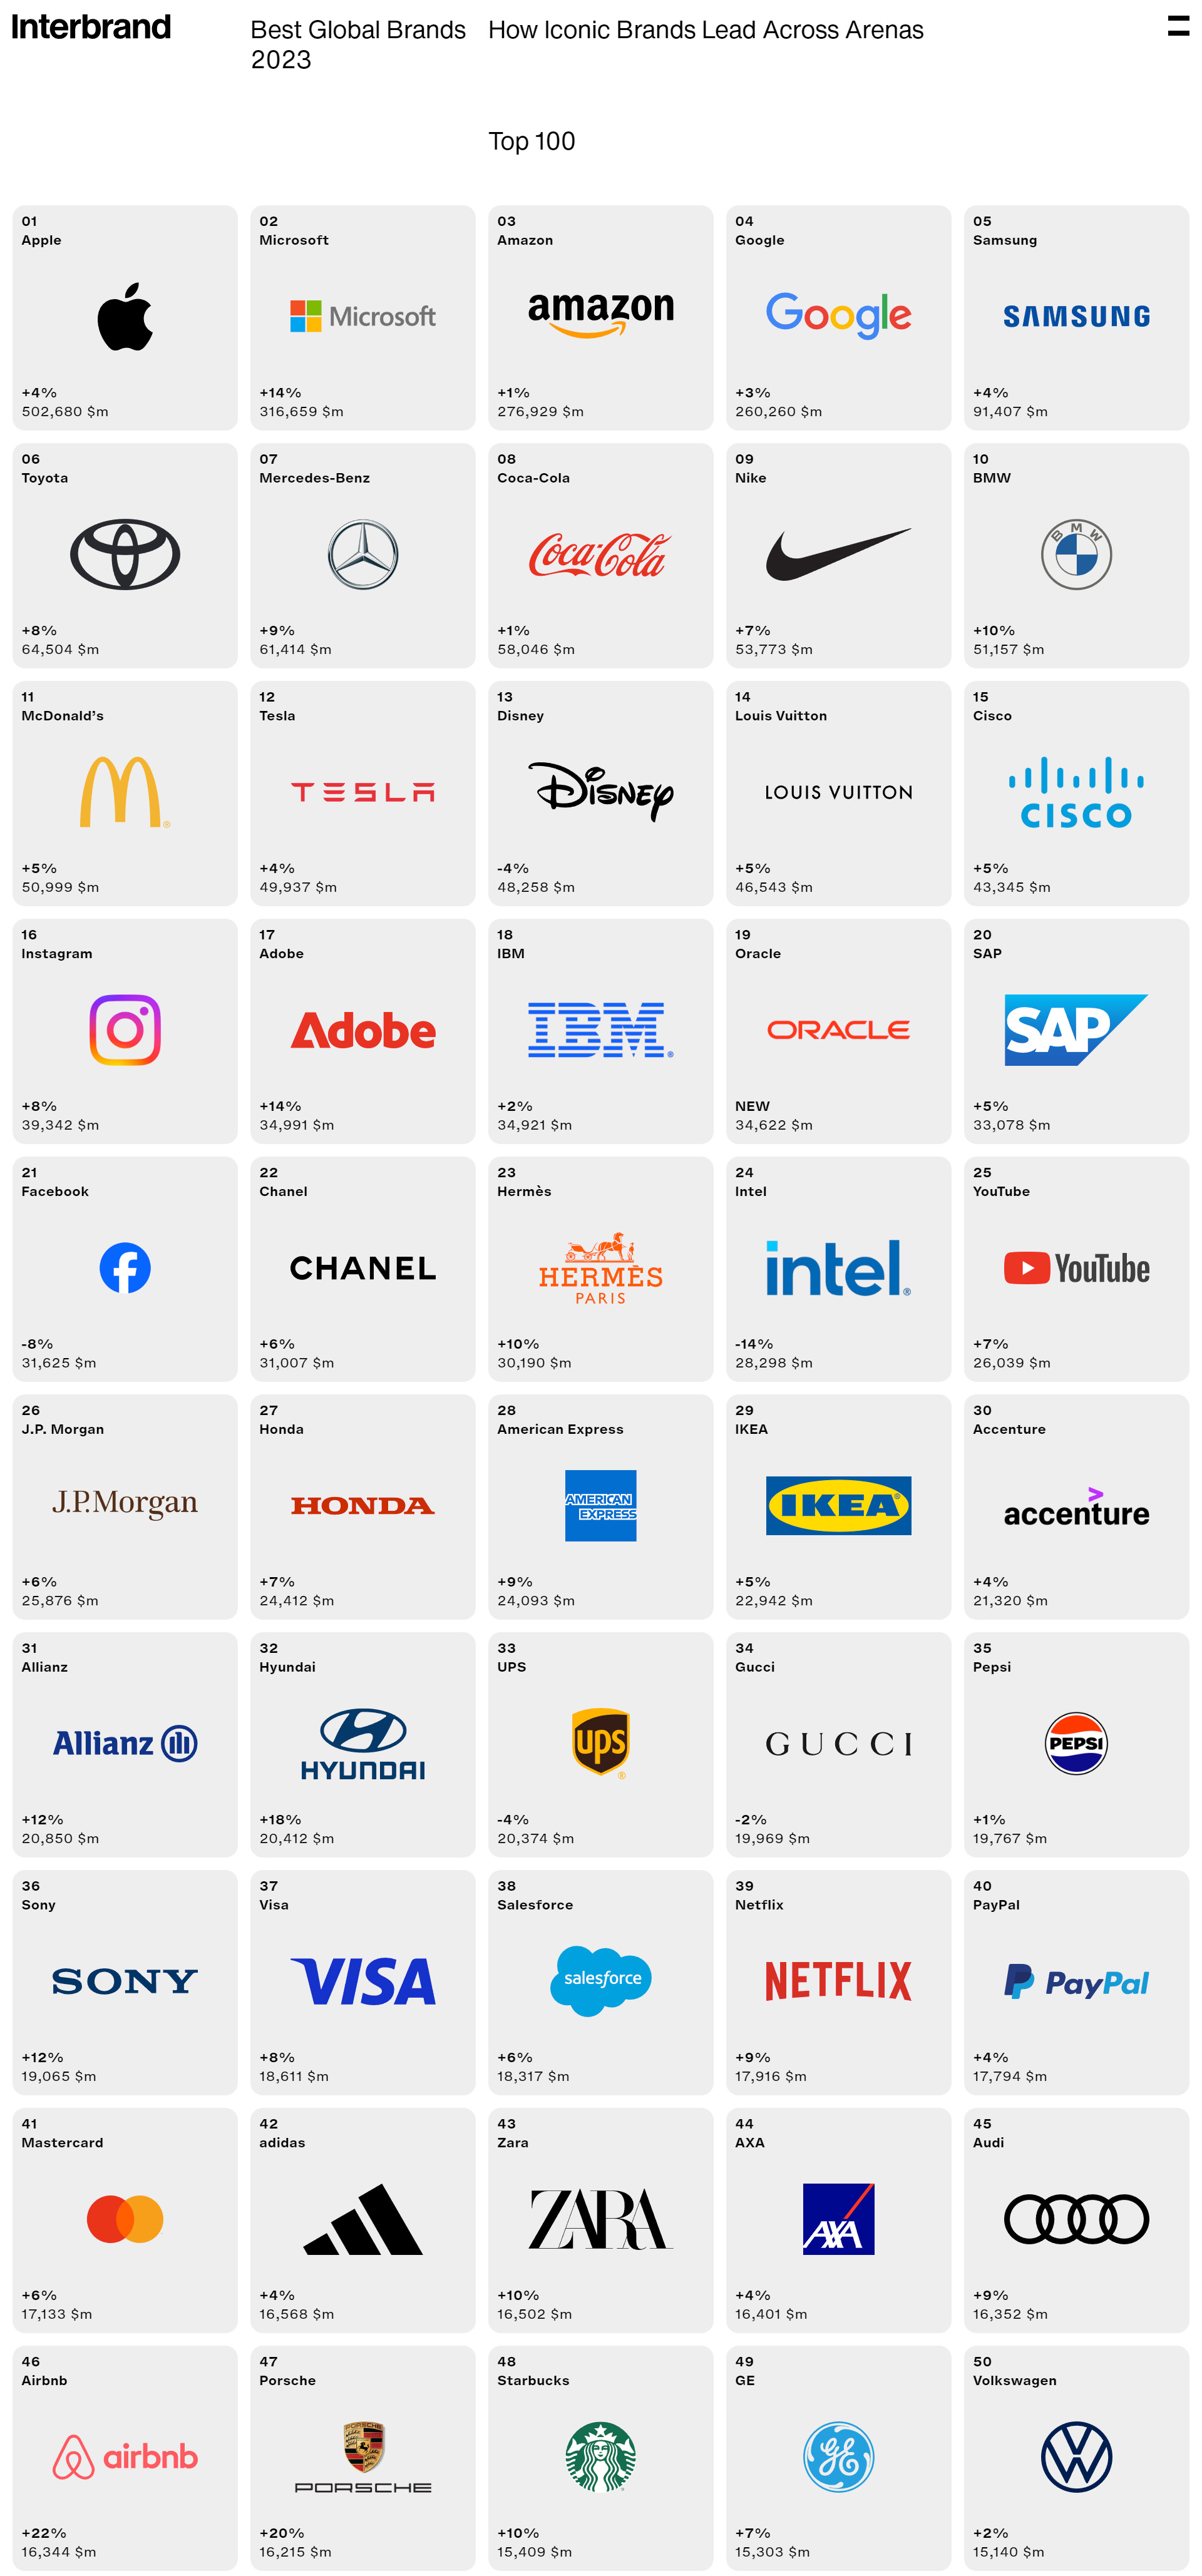 Interbrand-Best-Global-Brands-2023-1-BM